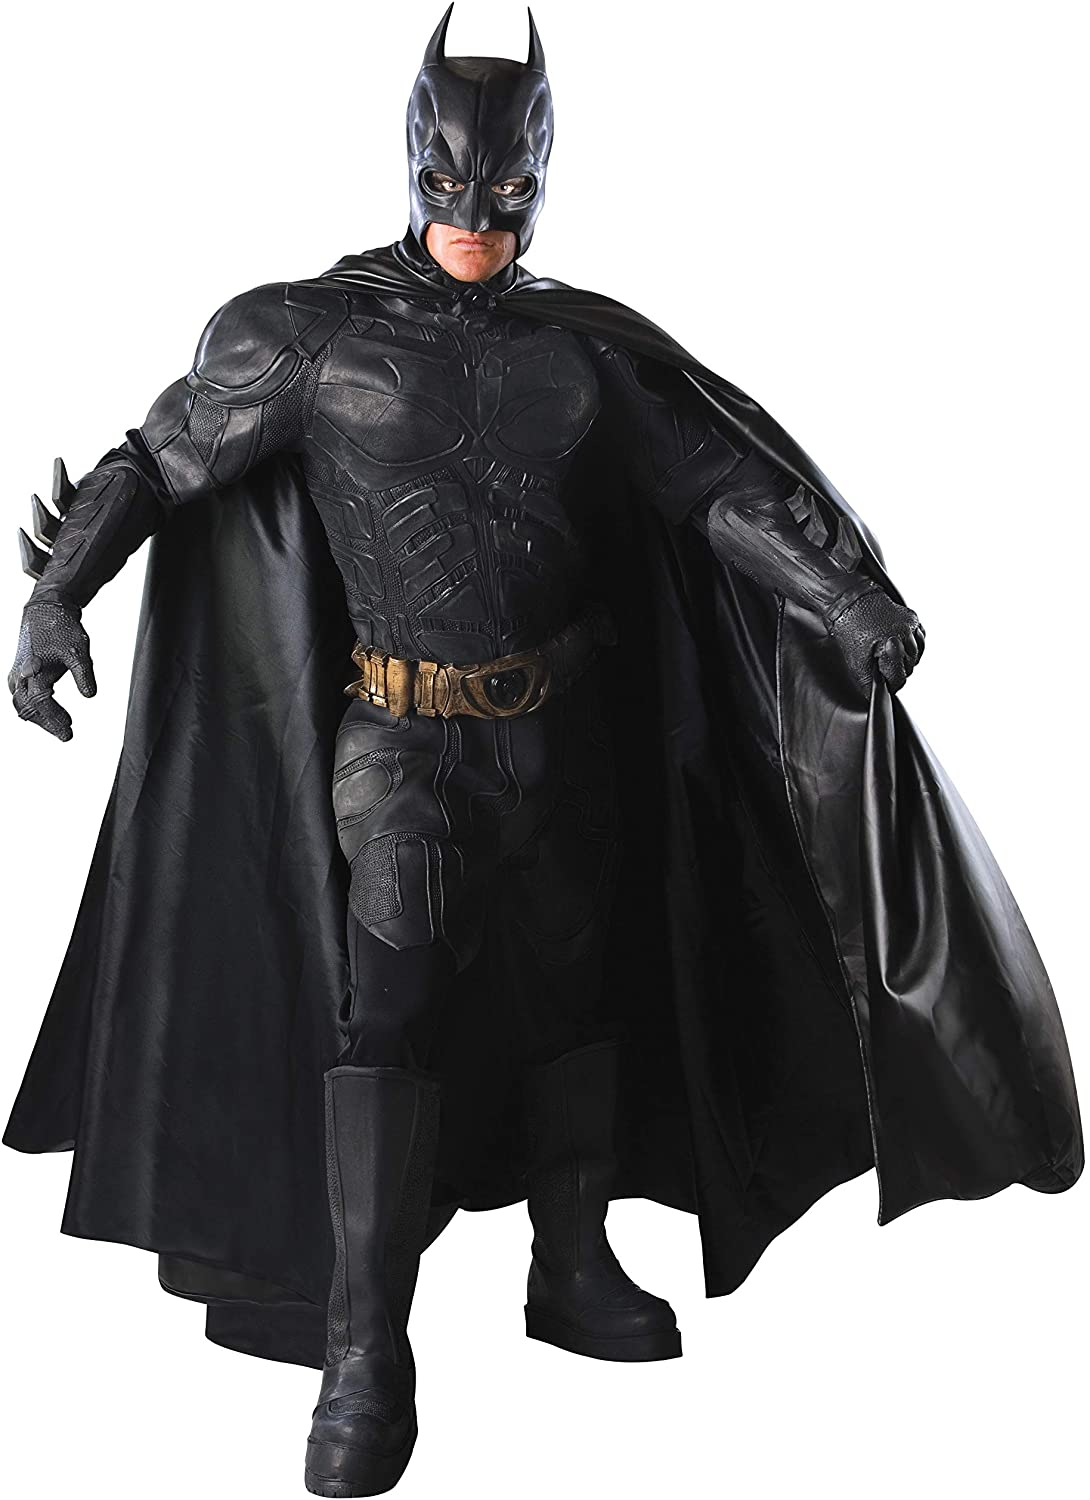 Batman Costume From The Dark Knight Trilogy movie